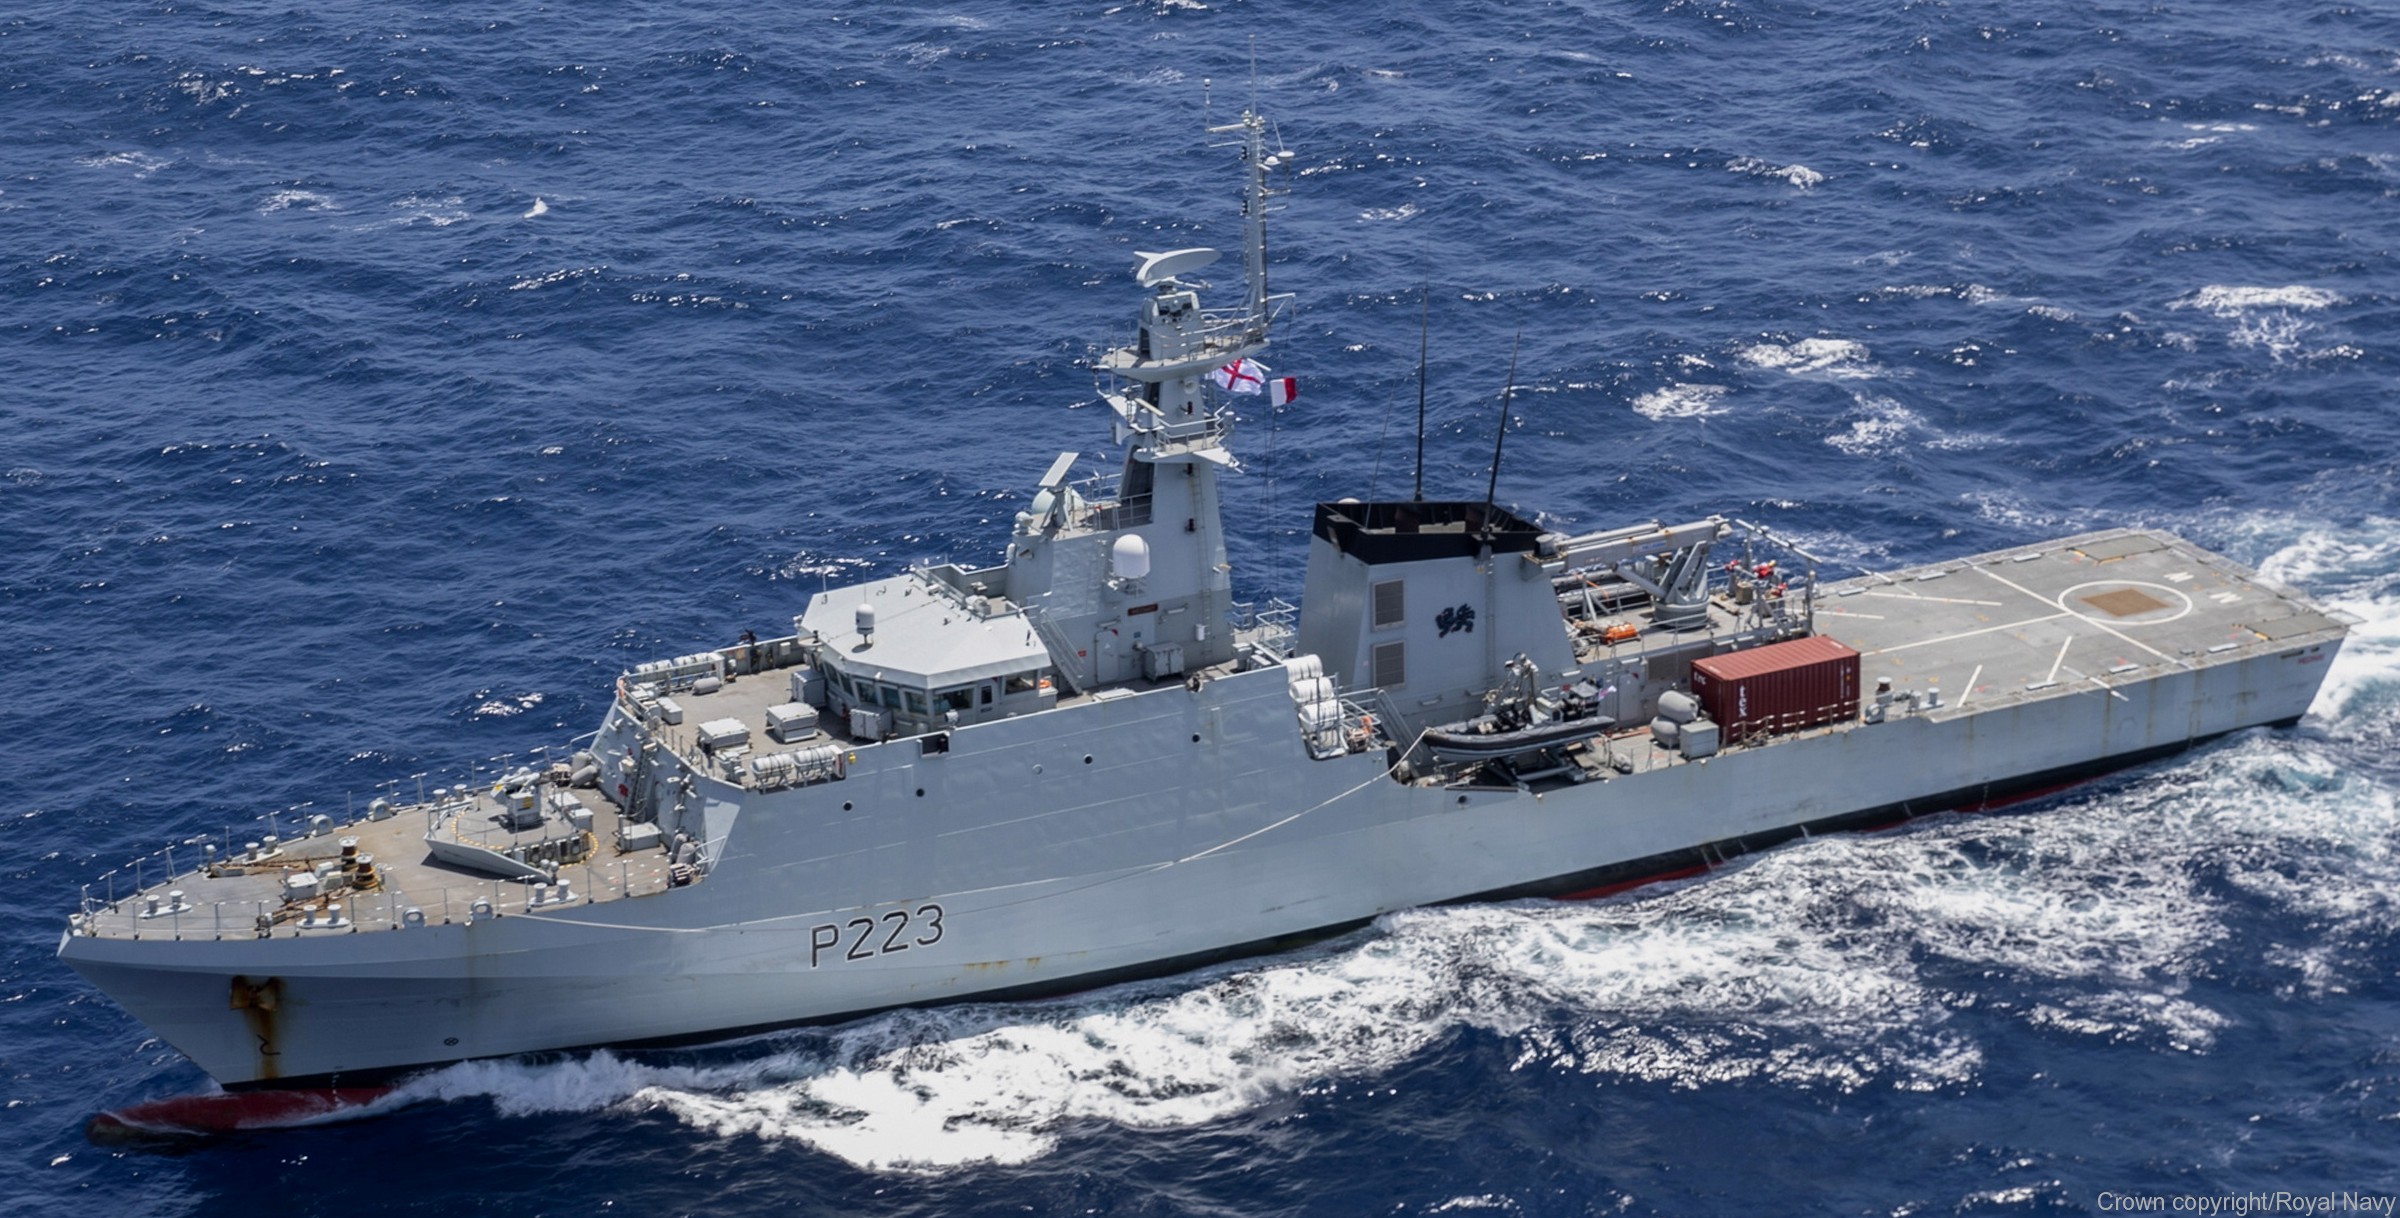 p-223 hms medway river class offshore patrol vessel opv royal navy 19